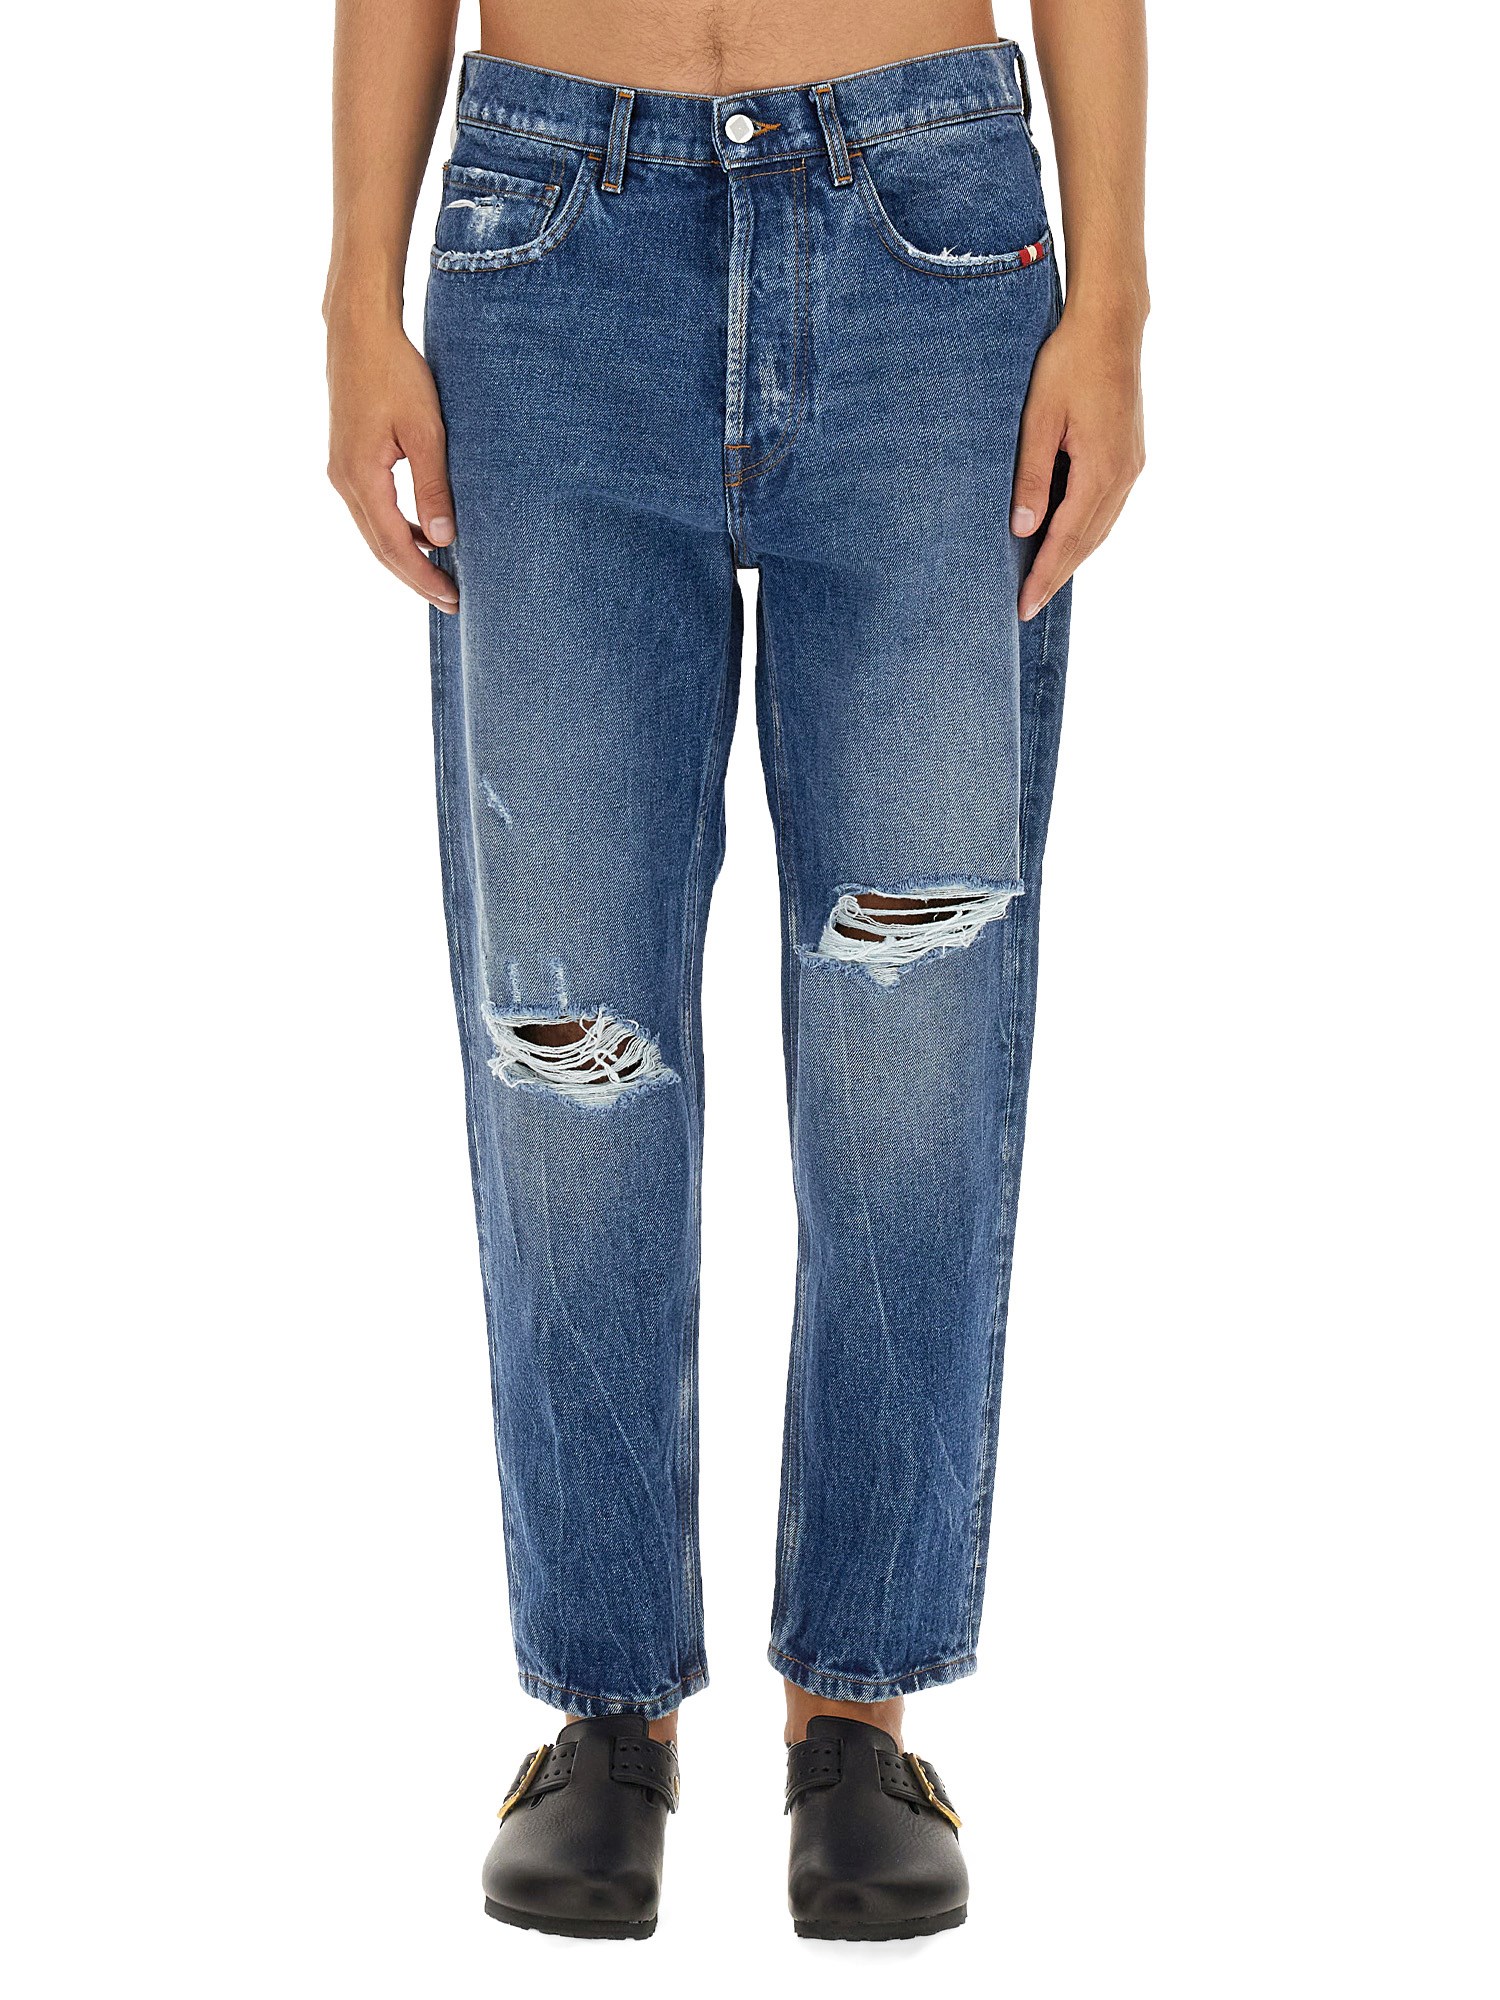 Amish amish "jeremiah wiser" jeans